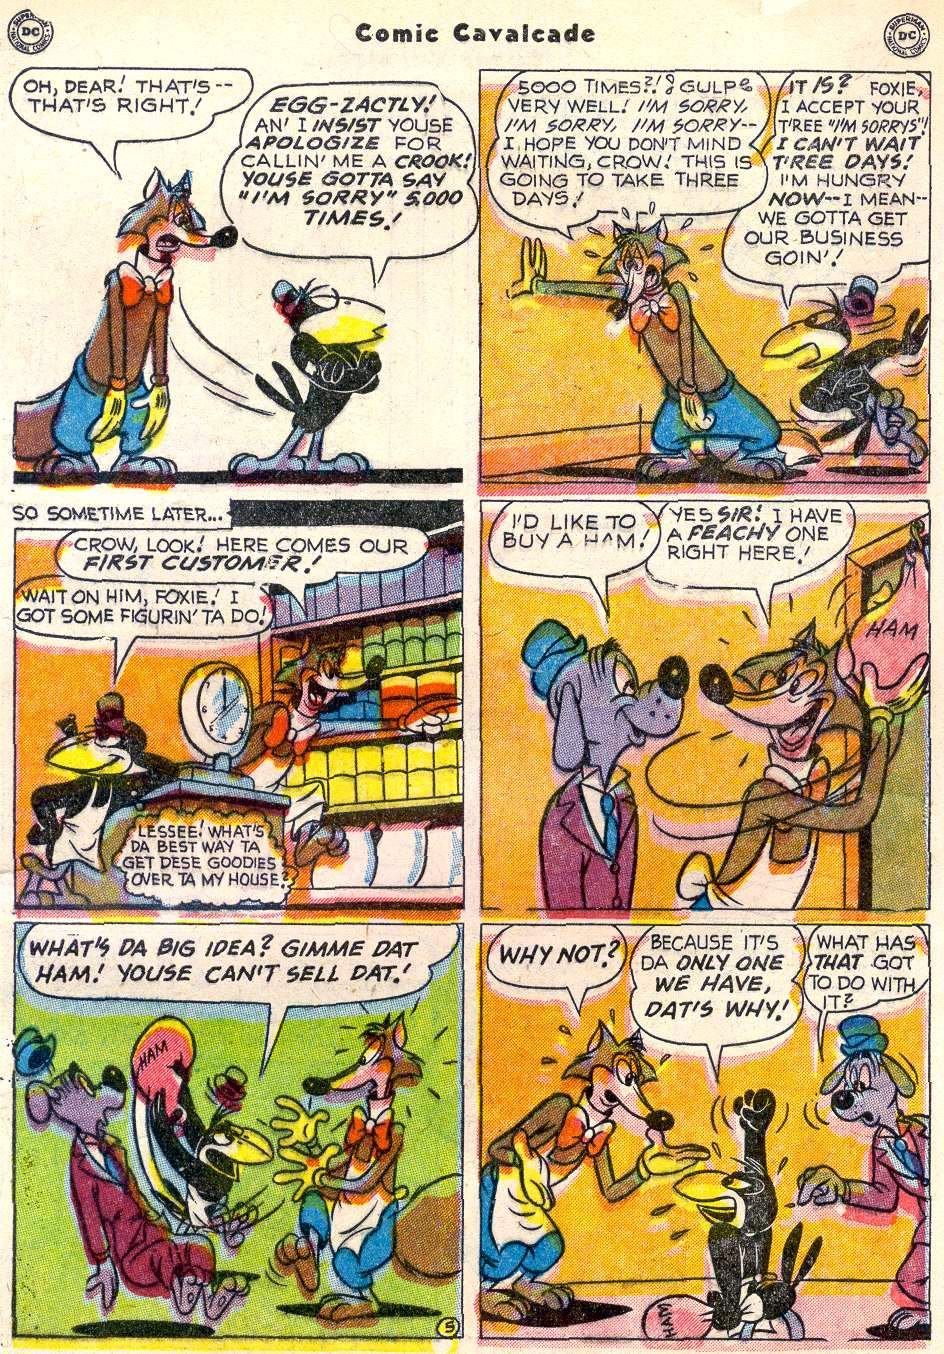 Comic Cavalcade issue 43 - Page 7